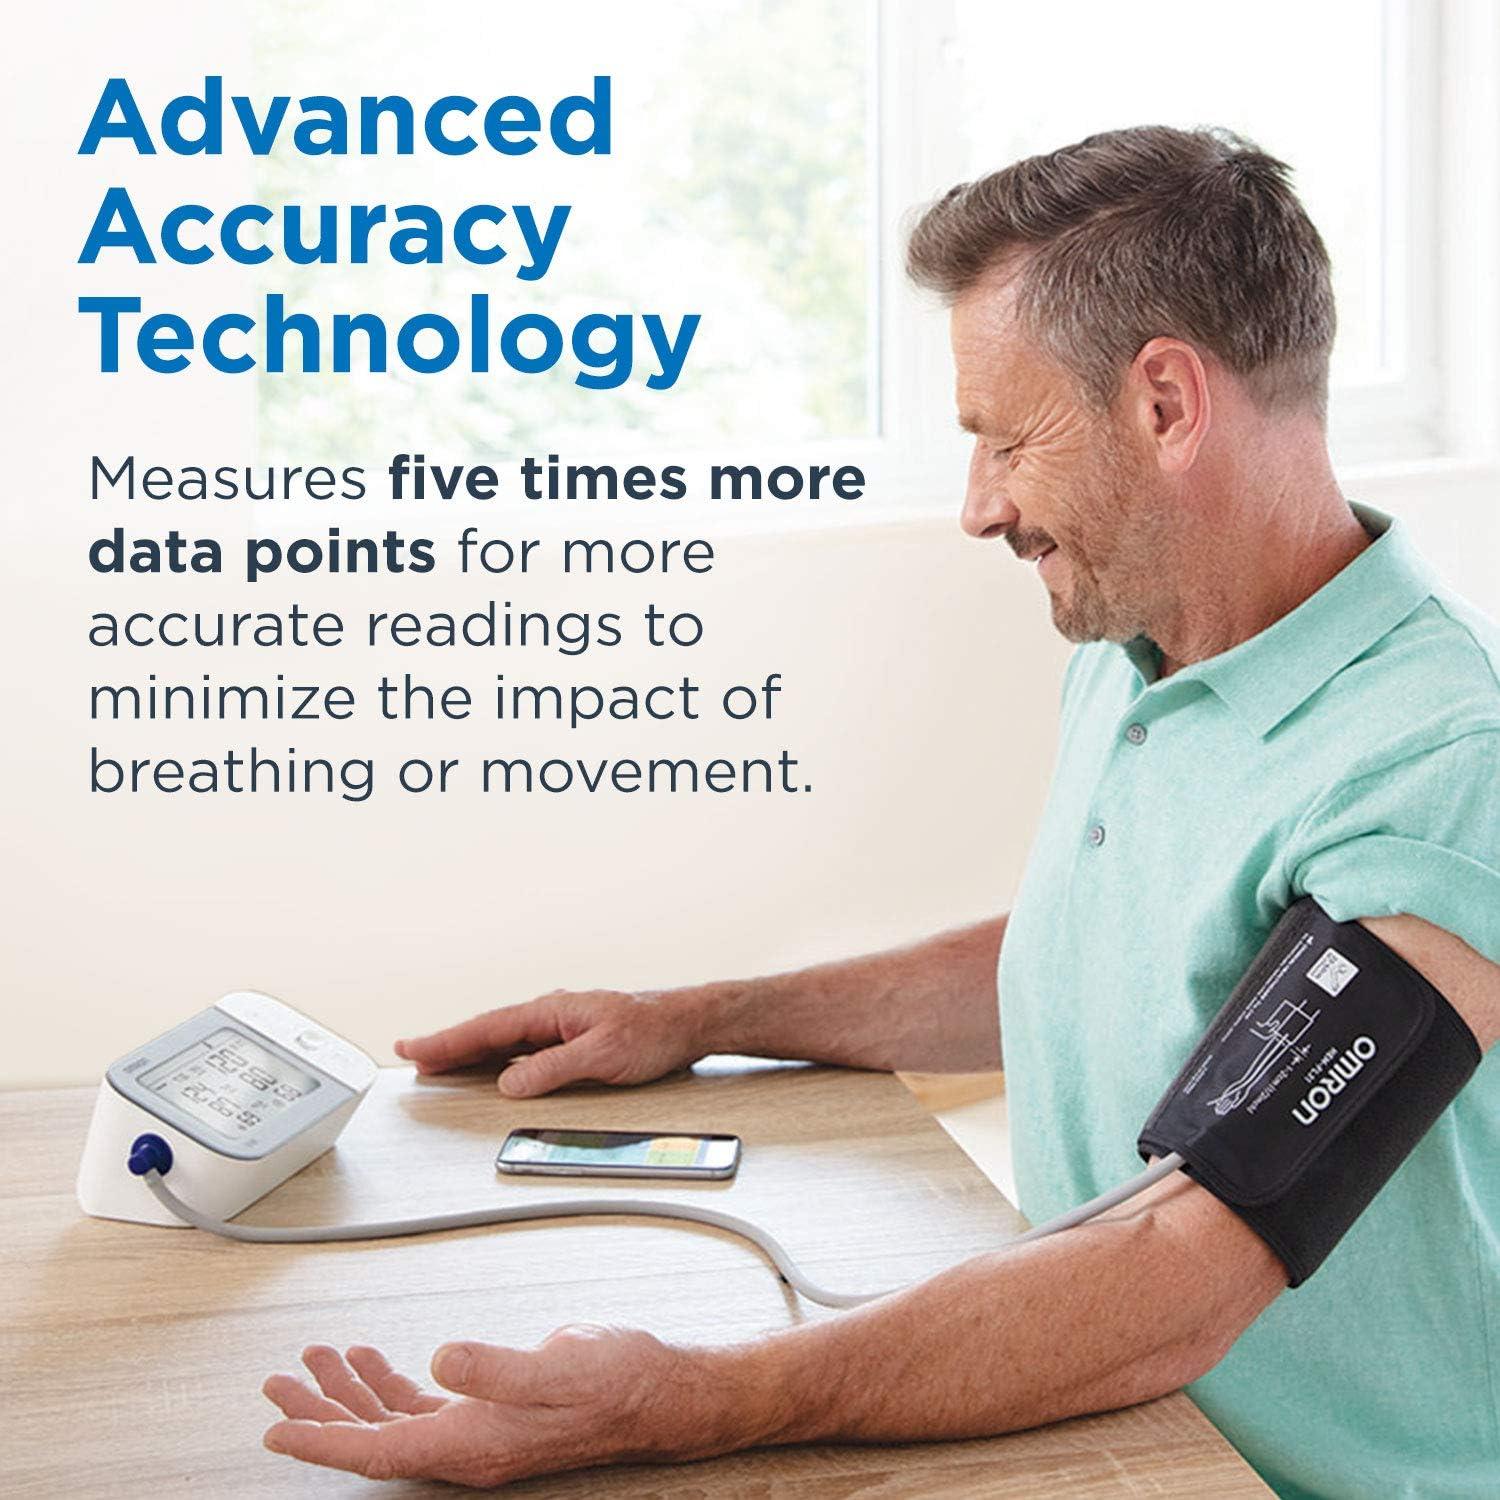 Omron Platinum Blood Pressure Monitor, Premium Upper Arm Cuff, Digital